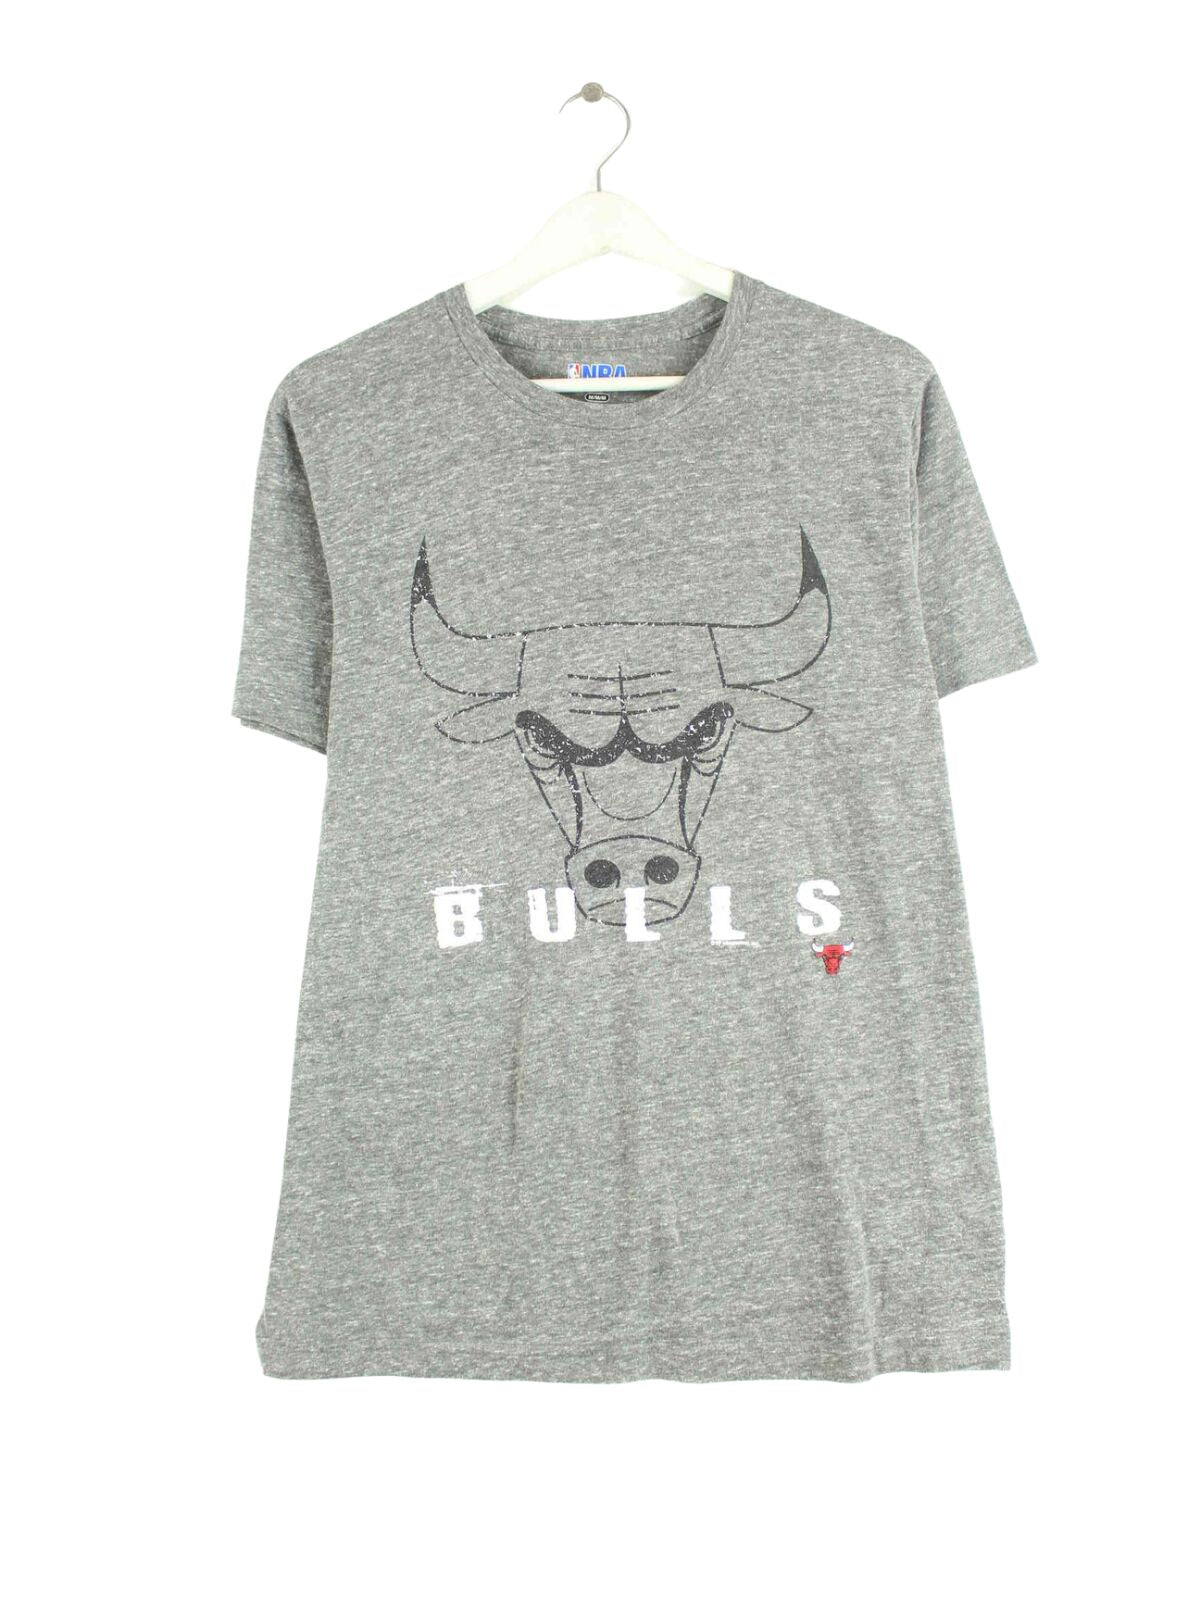 NBA Bulls Print T-Shirt Grau M (front image)